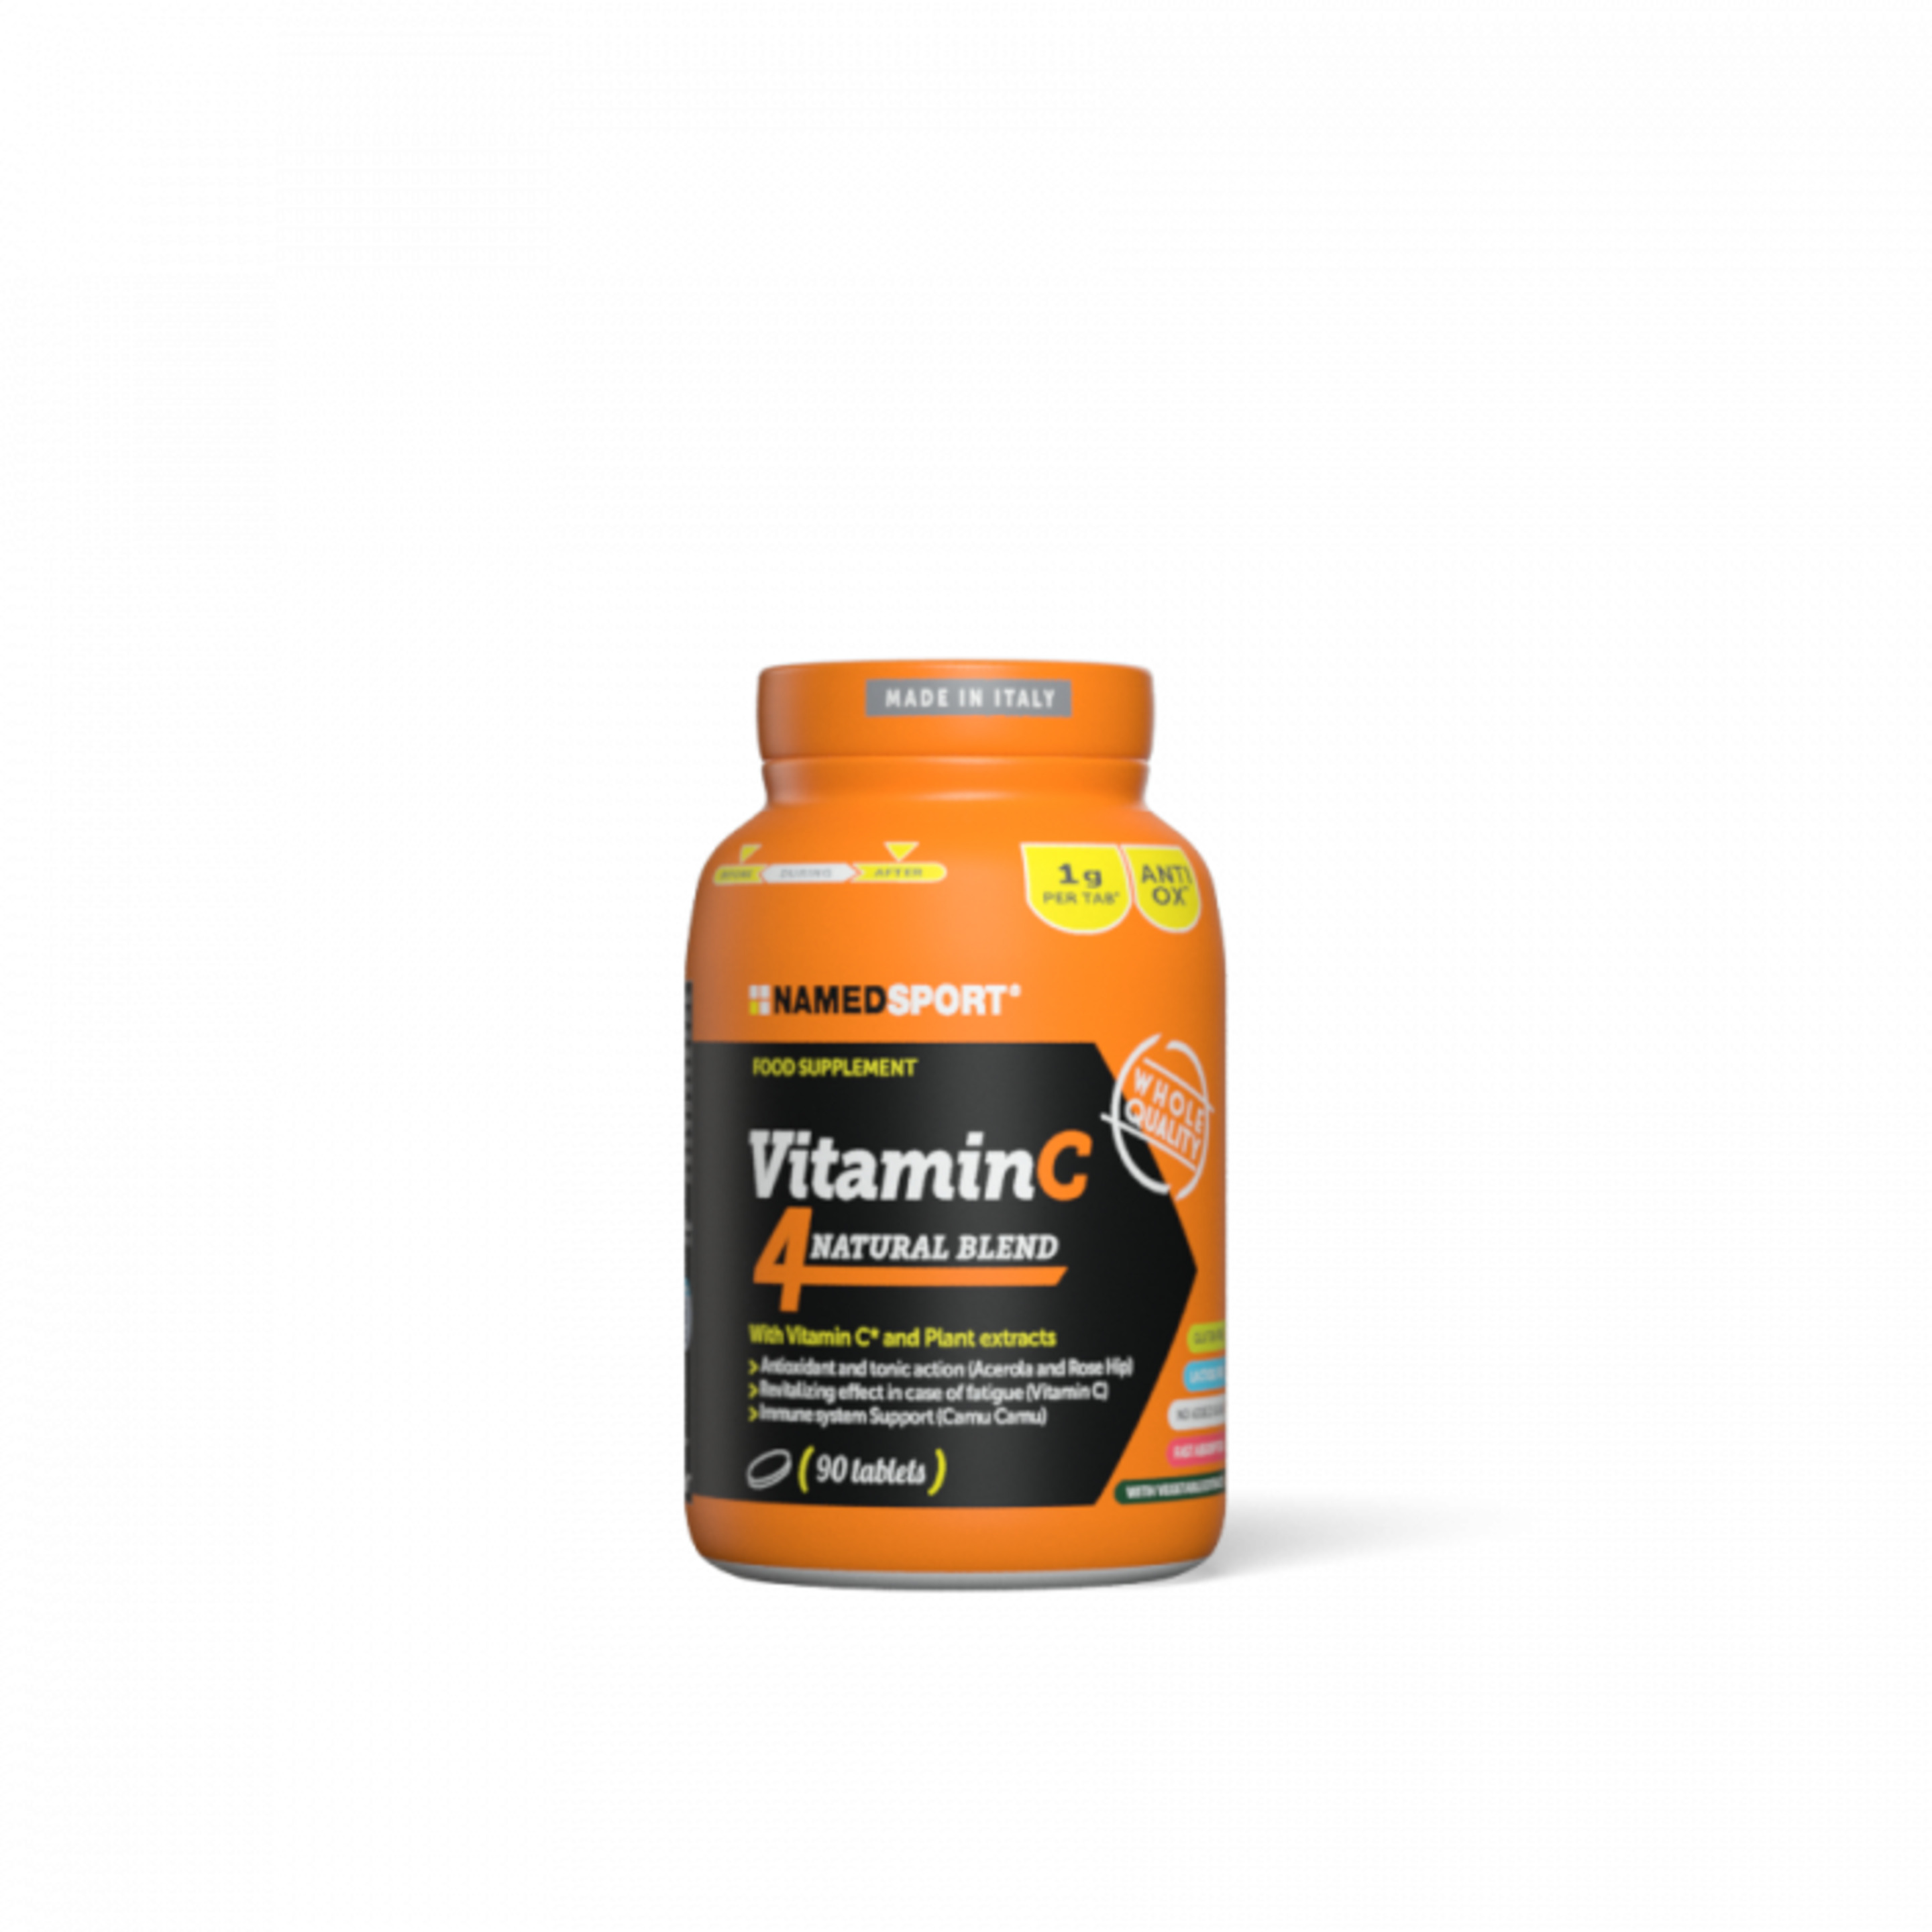 Vitamin C 4 Natural Blend  90 Cápsulas  MKP